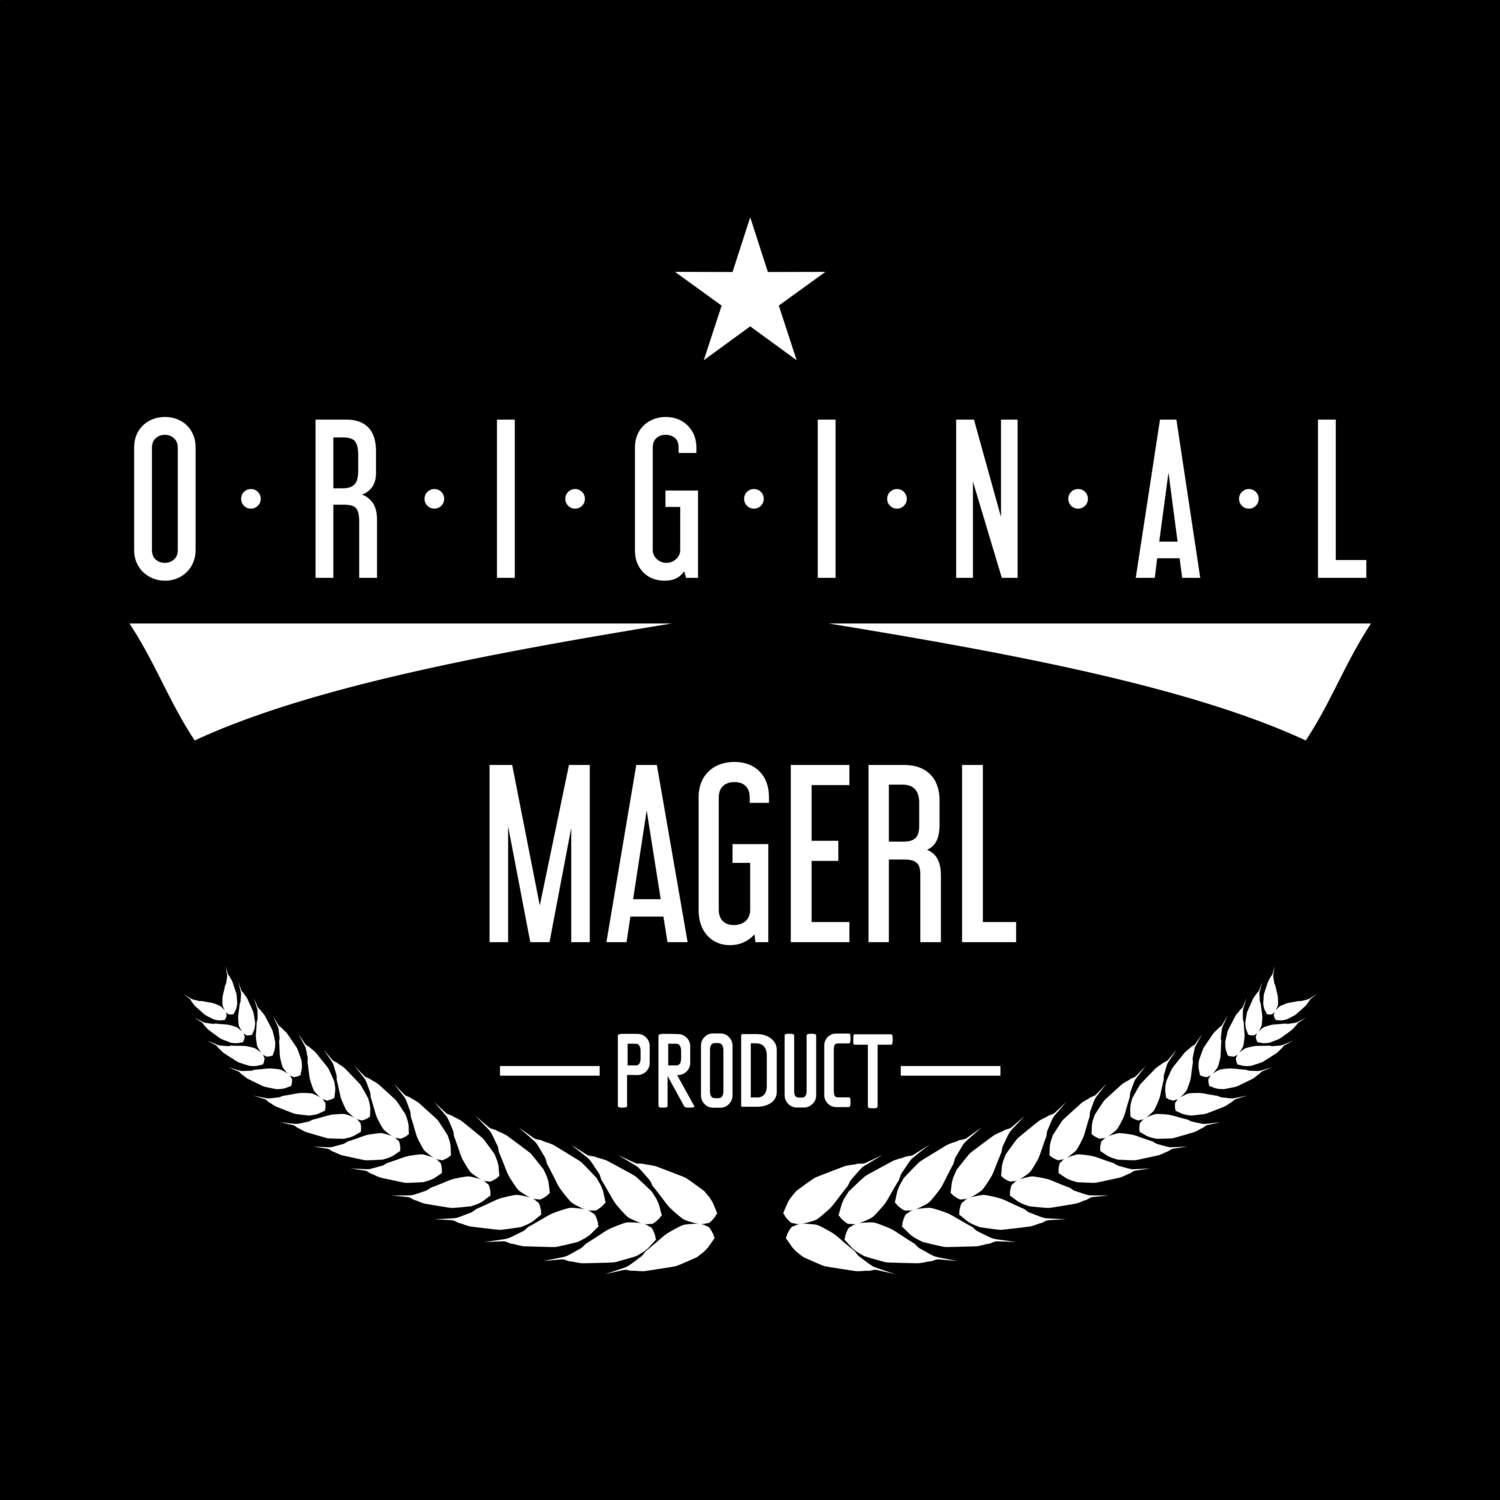 Magerl T-Shirt »Original Product«